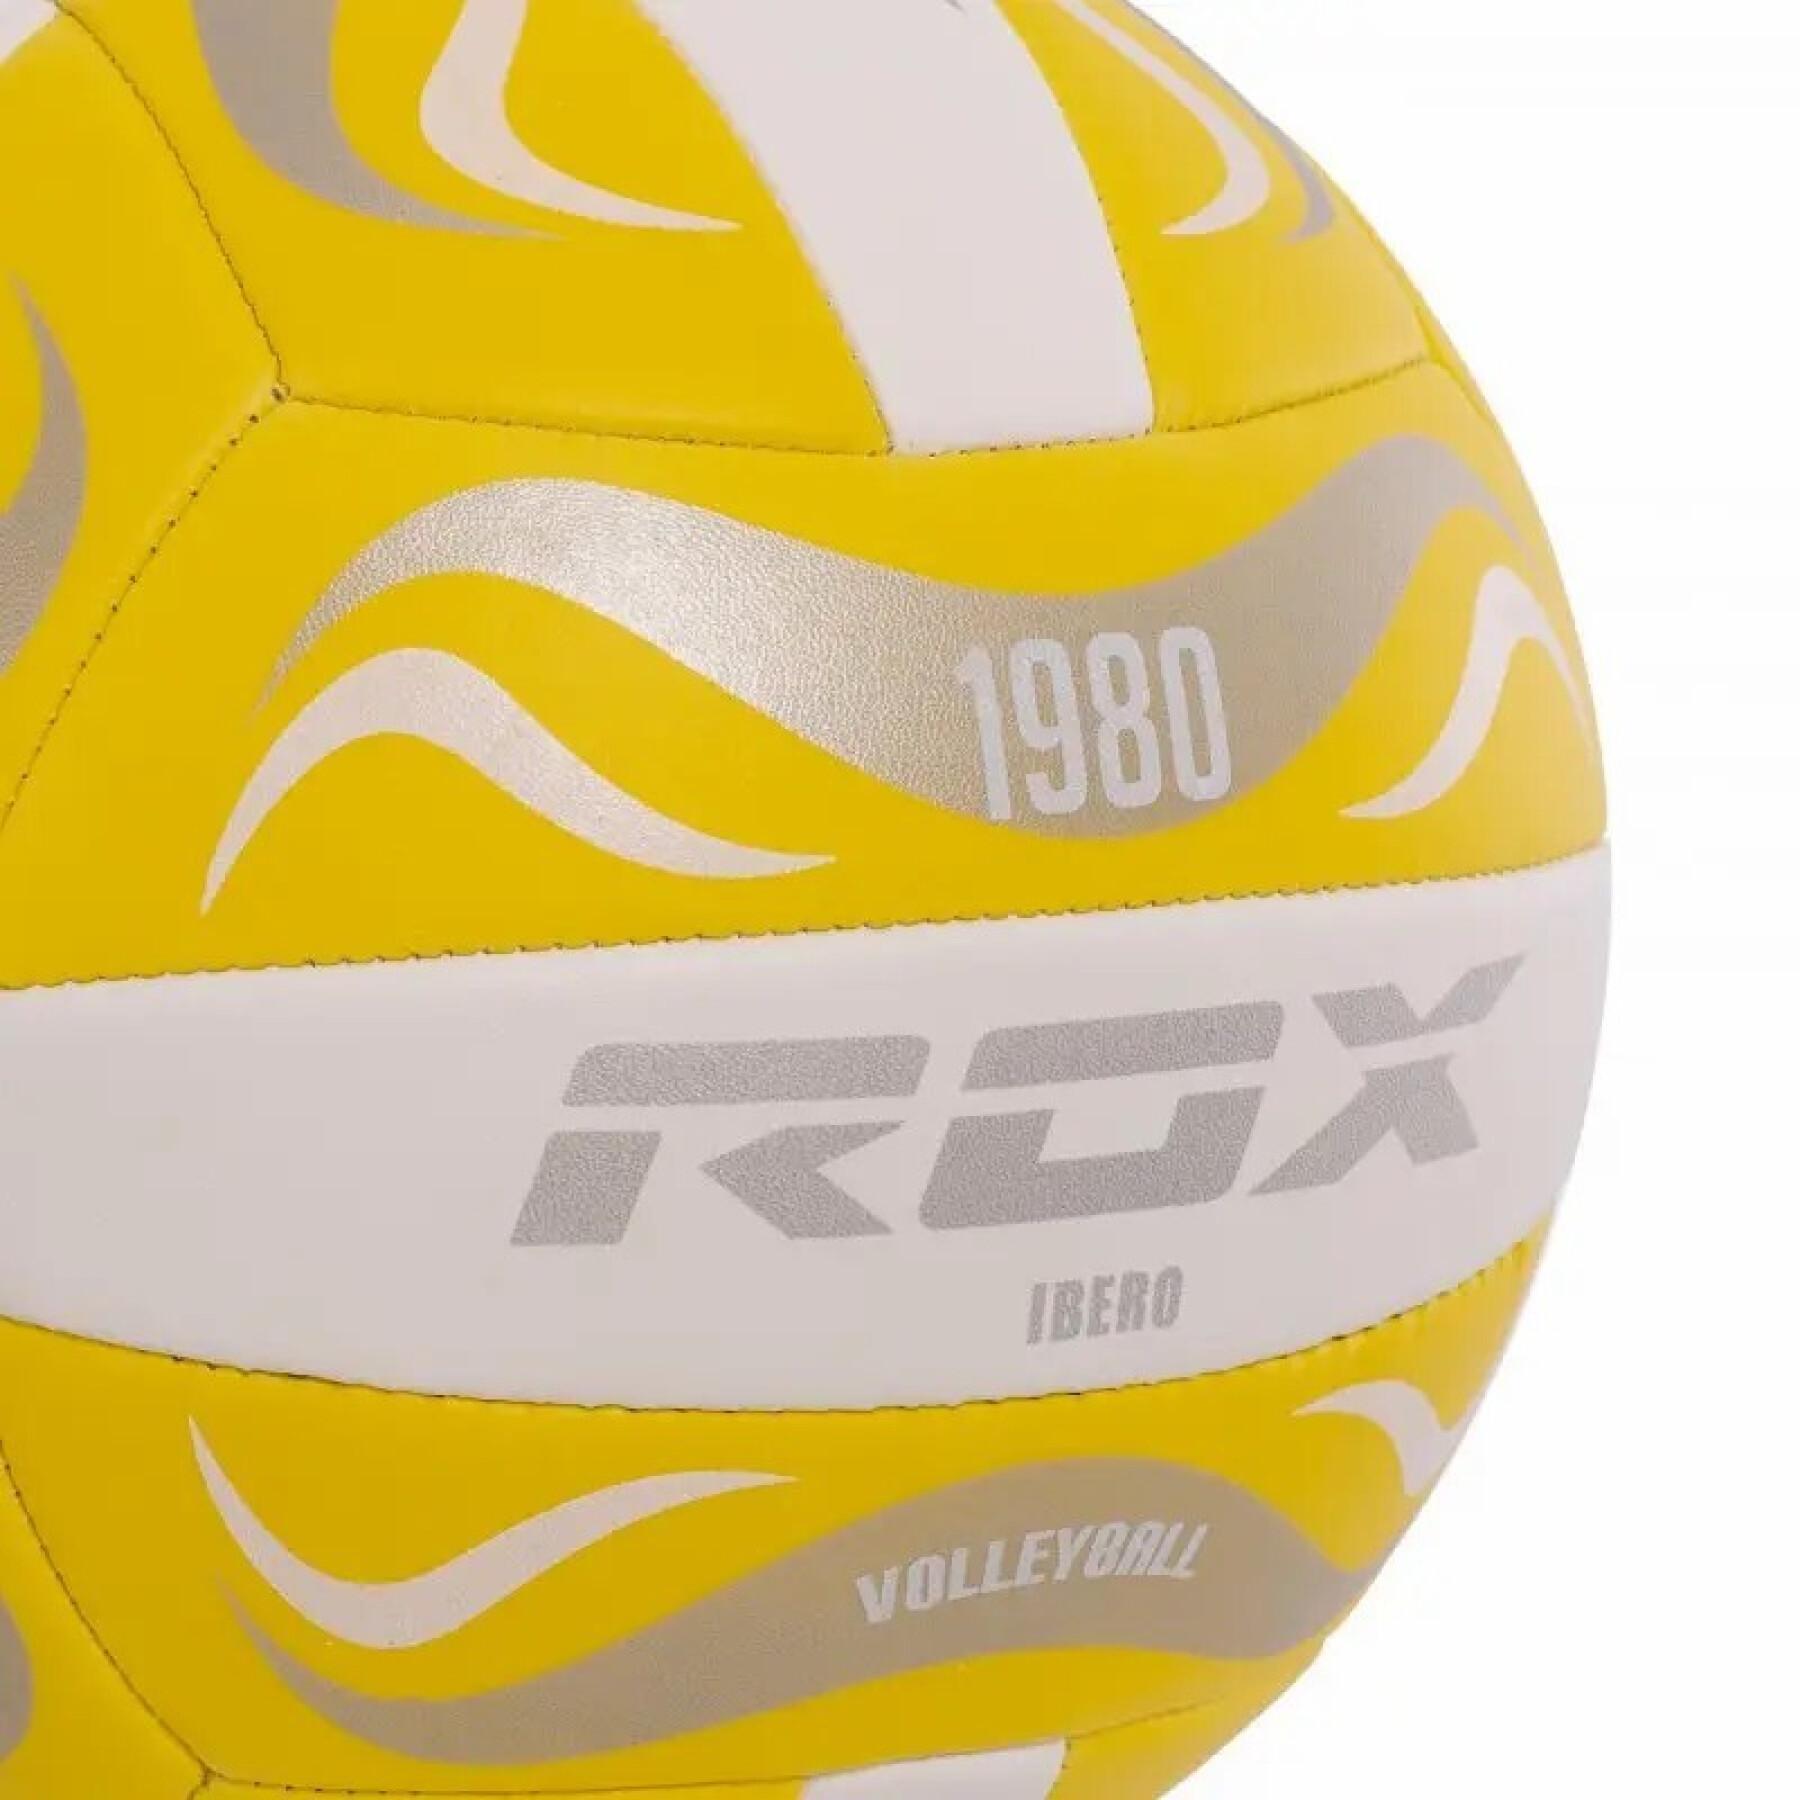 Volleyball Rox R-Ibero